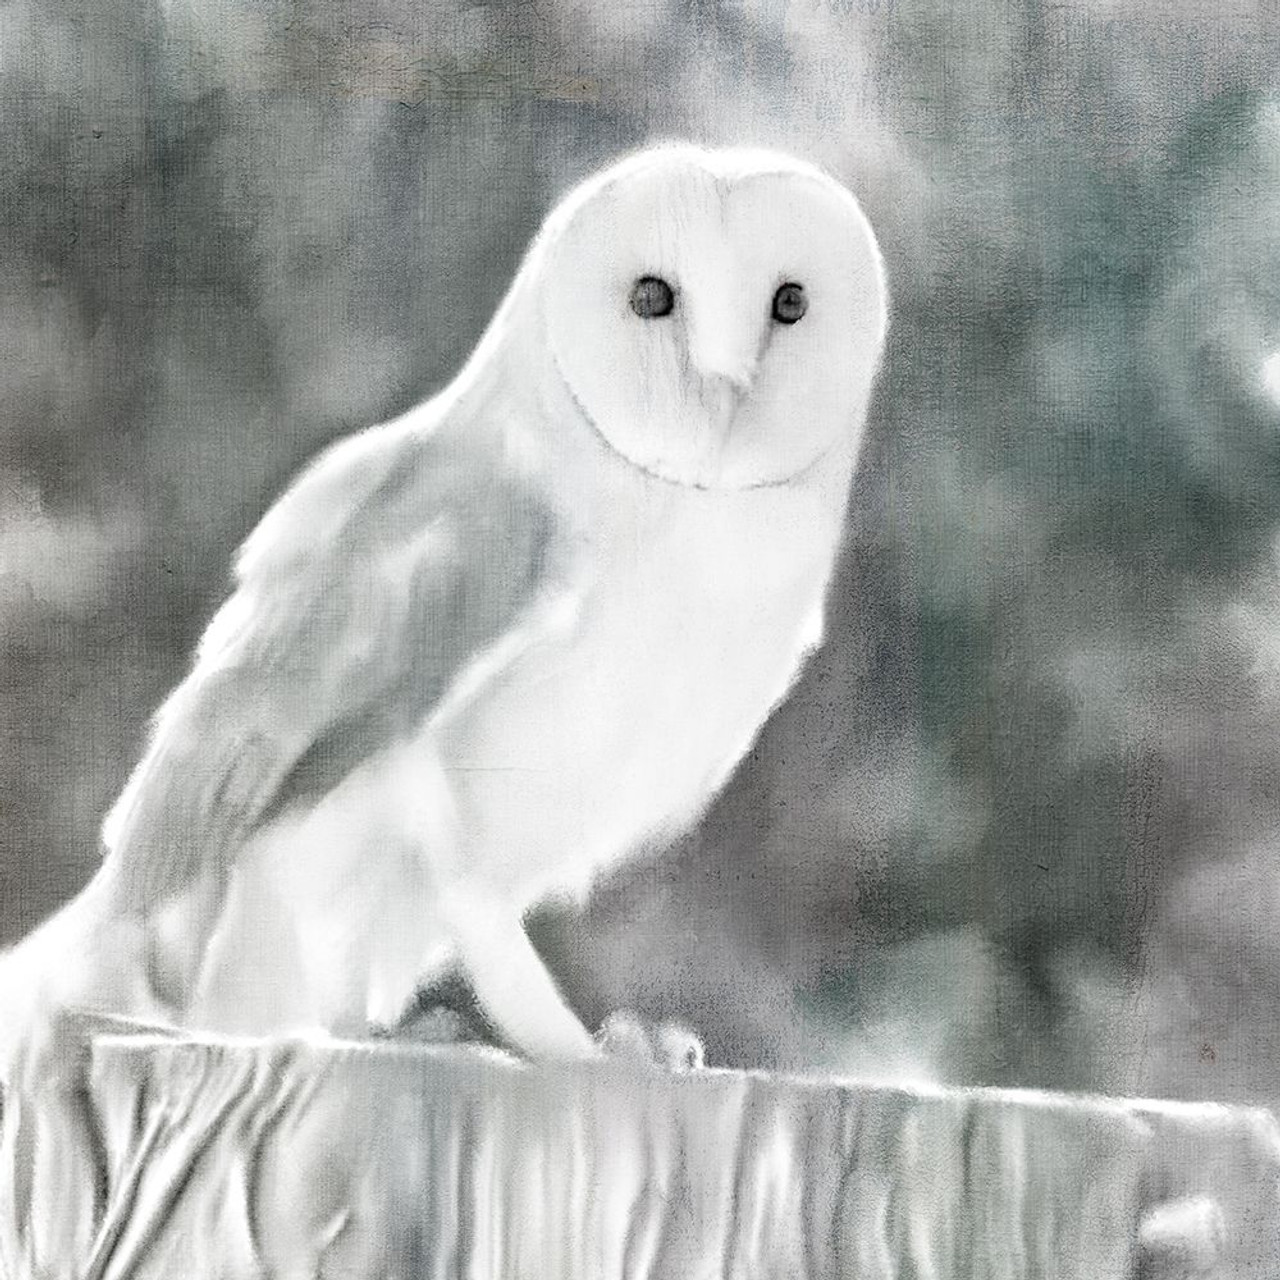 White Barn Owl Print by Ann Bailey # BASQ061 - Posterazzi